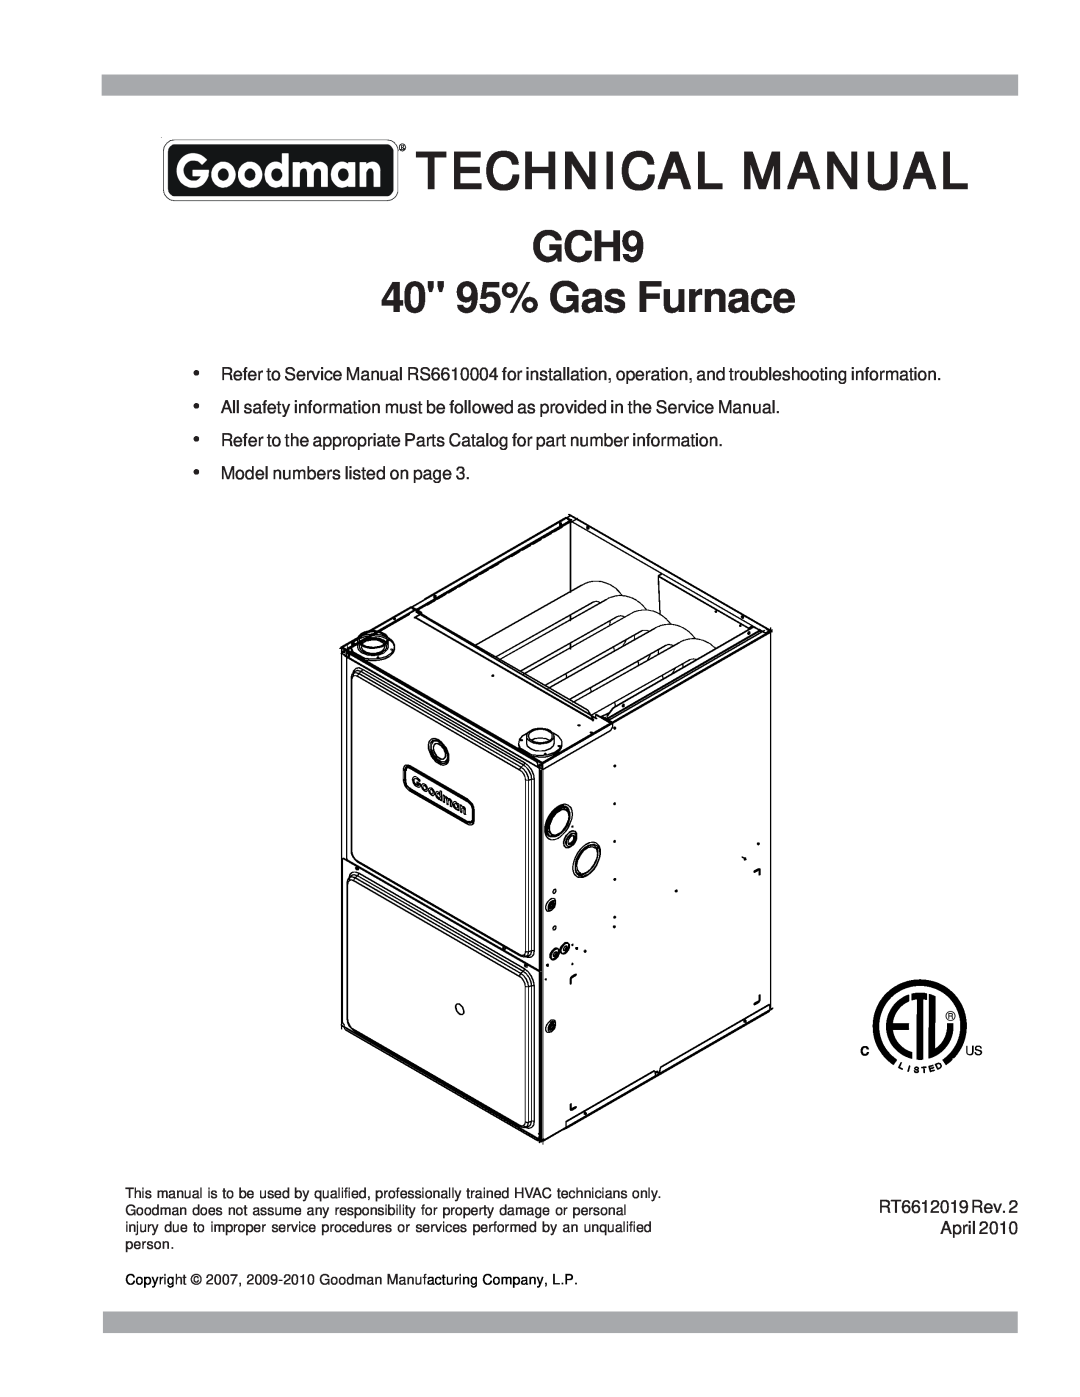 Goodman Mfg service manual GCH9 40 95% Gas Furnace, Technical Manual 